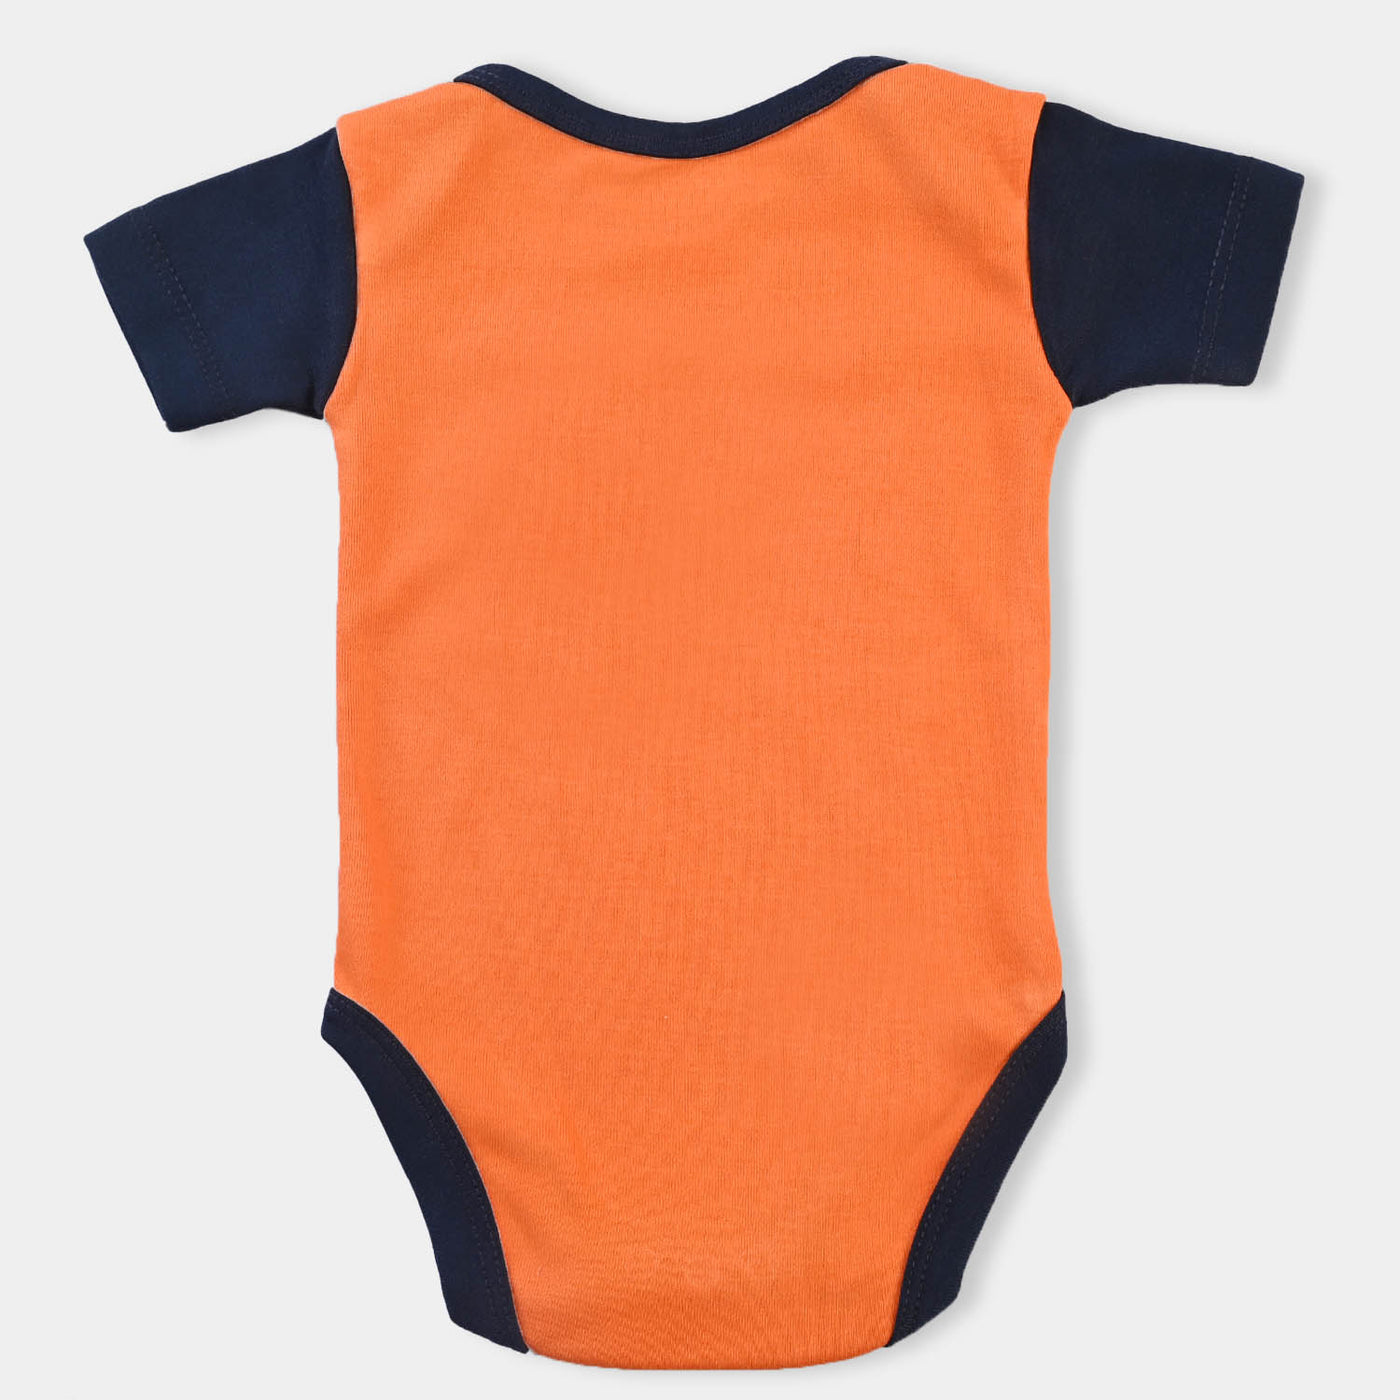 Infant Unisex Body Suit Pack of 3